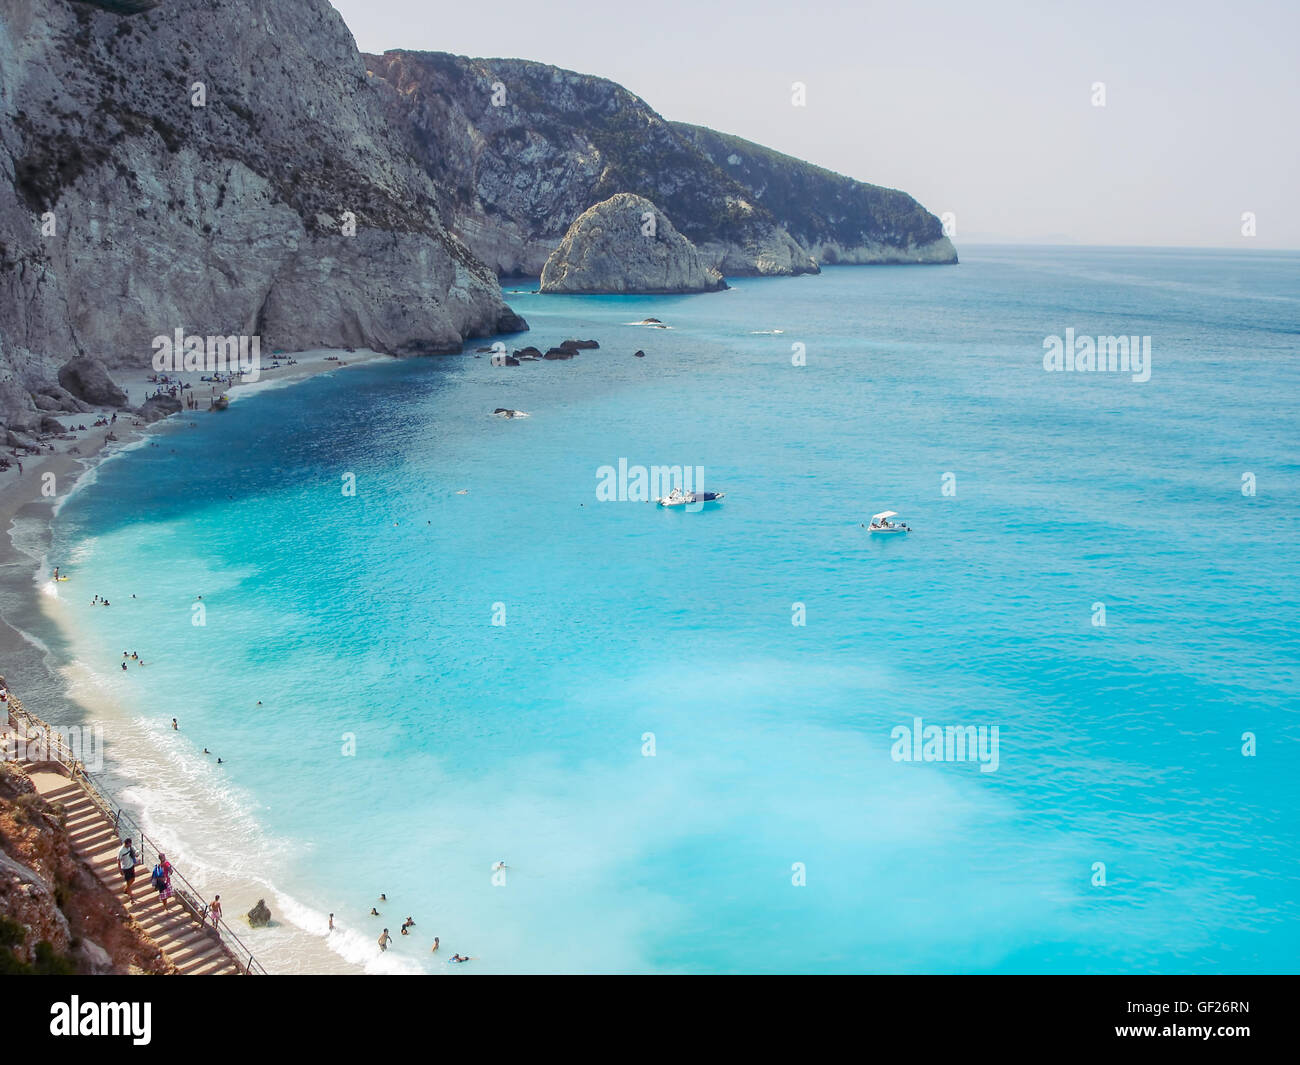 Porto Katsiki Is A Beach On The Ionian Sea Island Of Lefkada, Greece Stock Photo